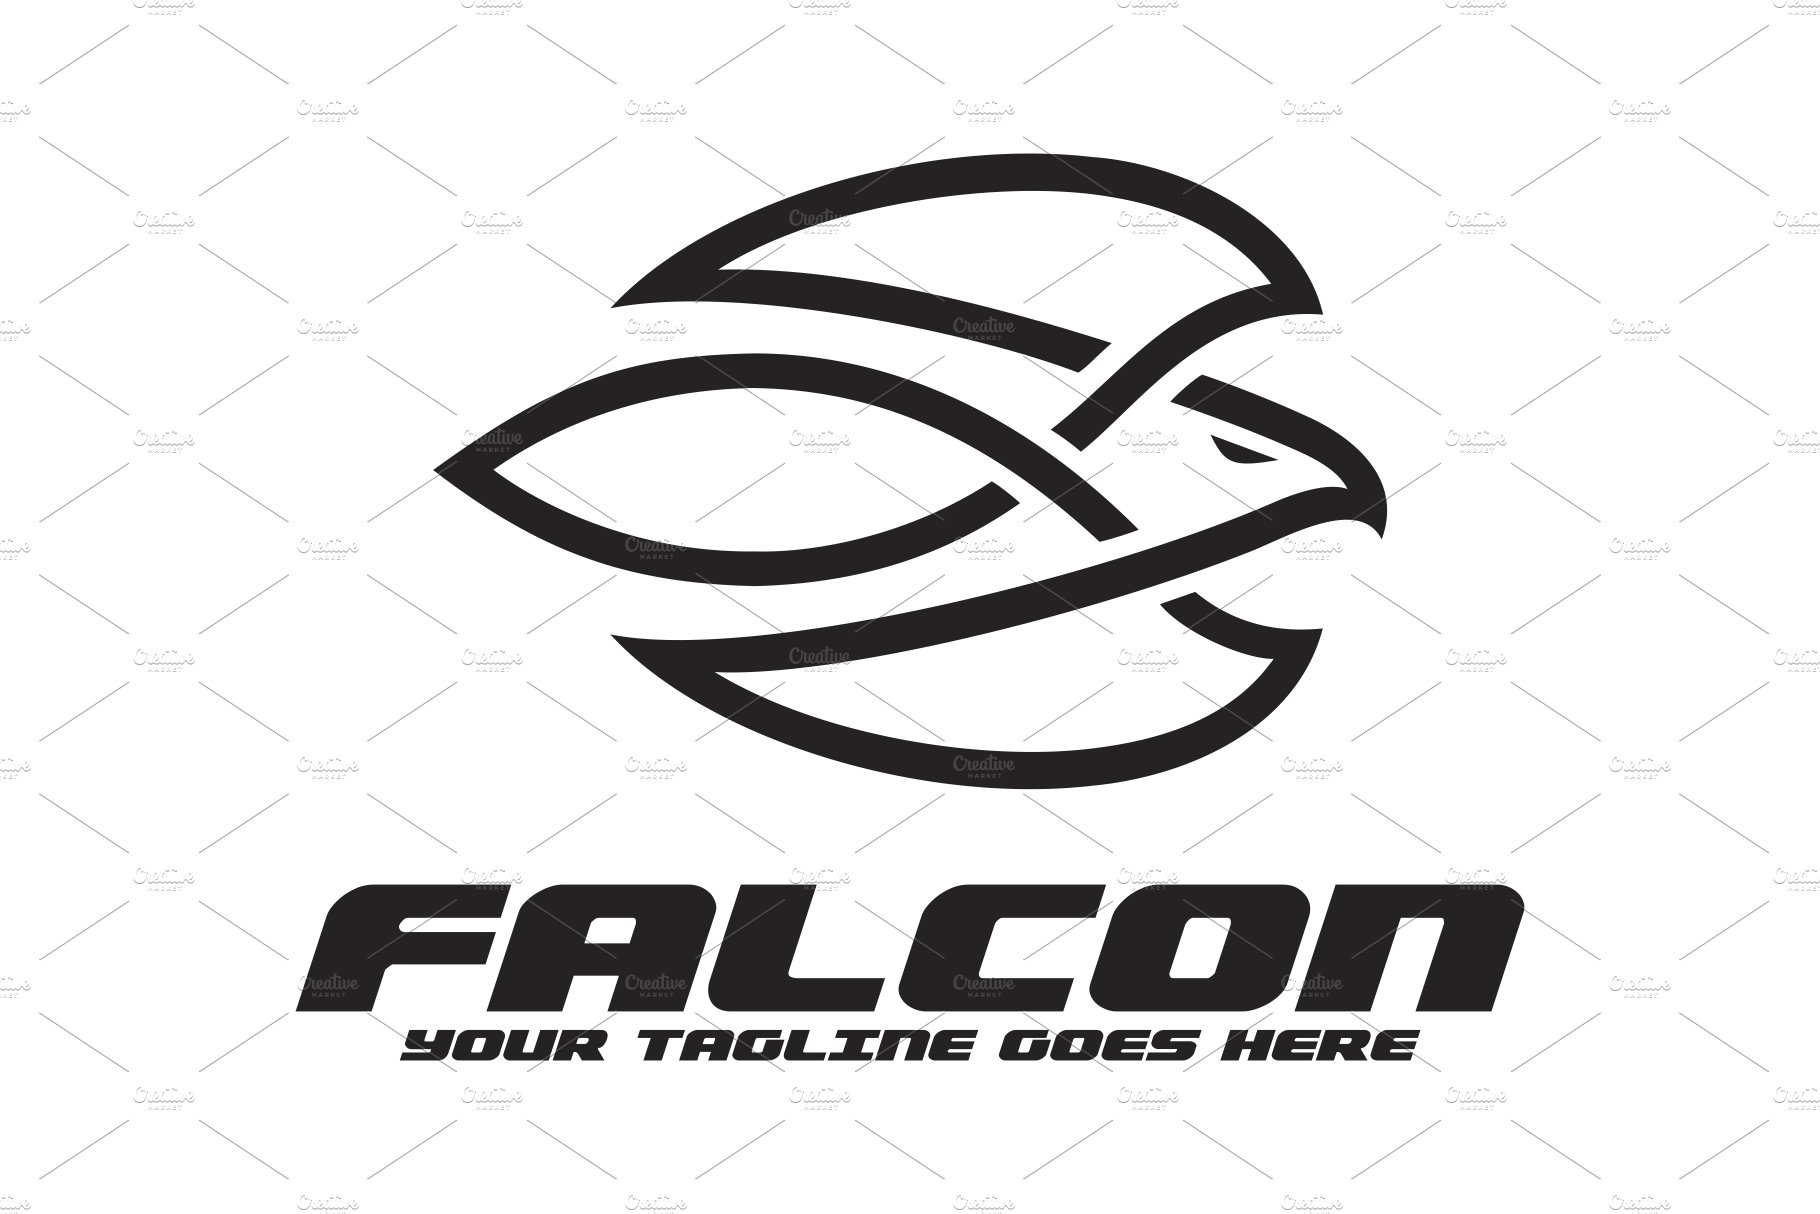 Falcon Logo cover image.